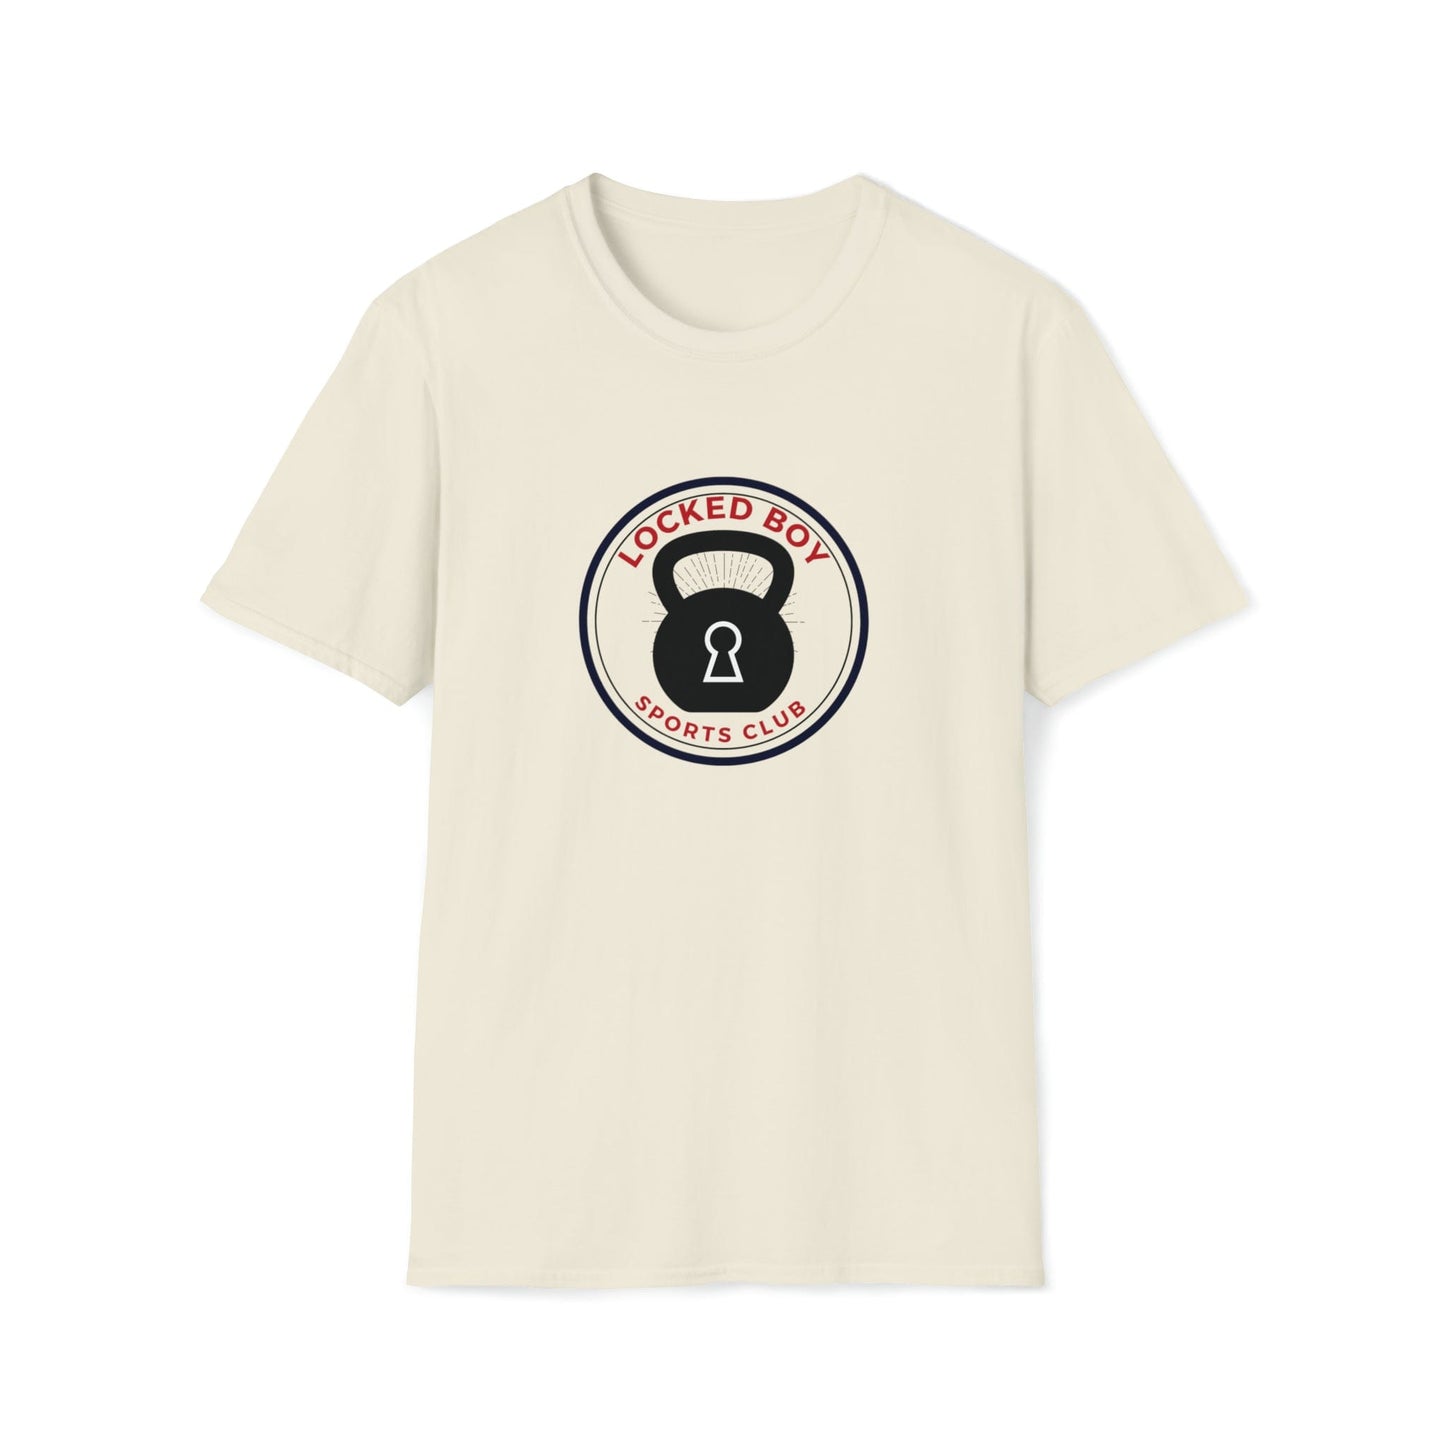 T-Shirt Natural / S LockedBoy Sports Club - Chastity Tshirt Kettlebell LEATHERDADDY BATOR